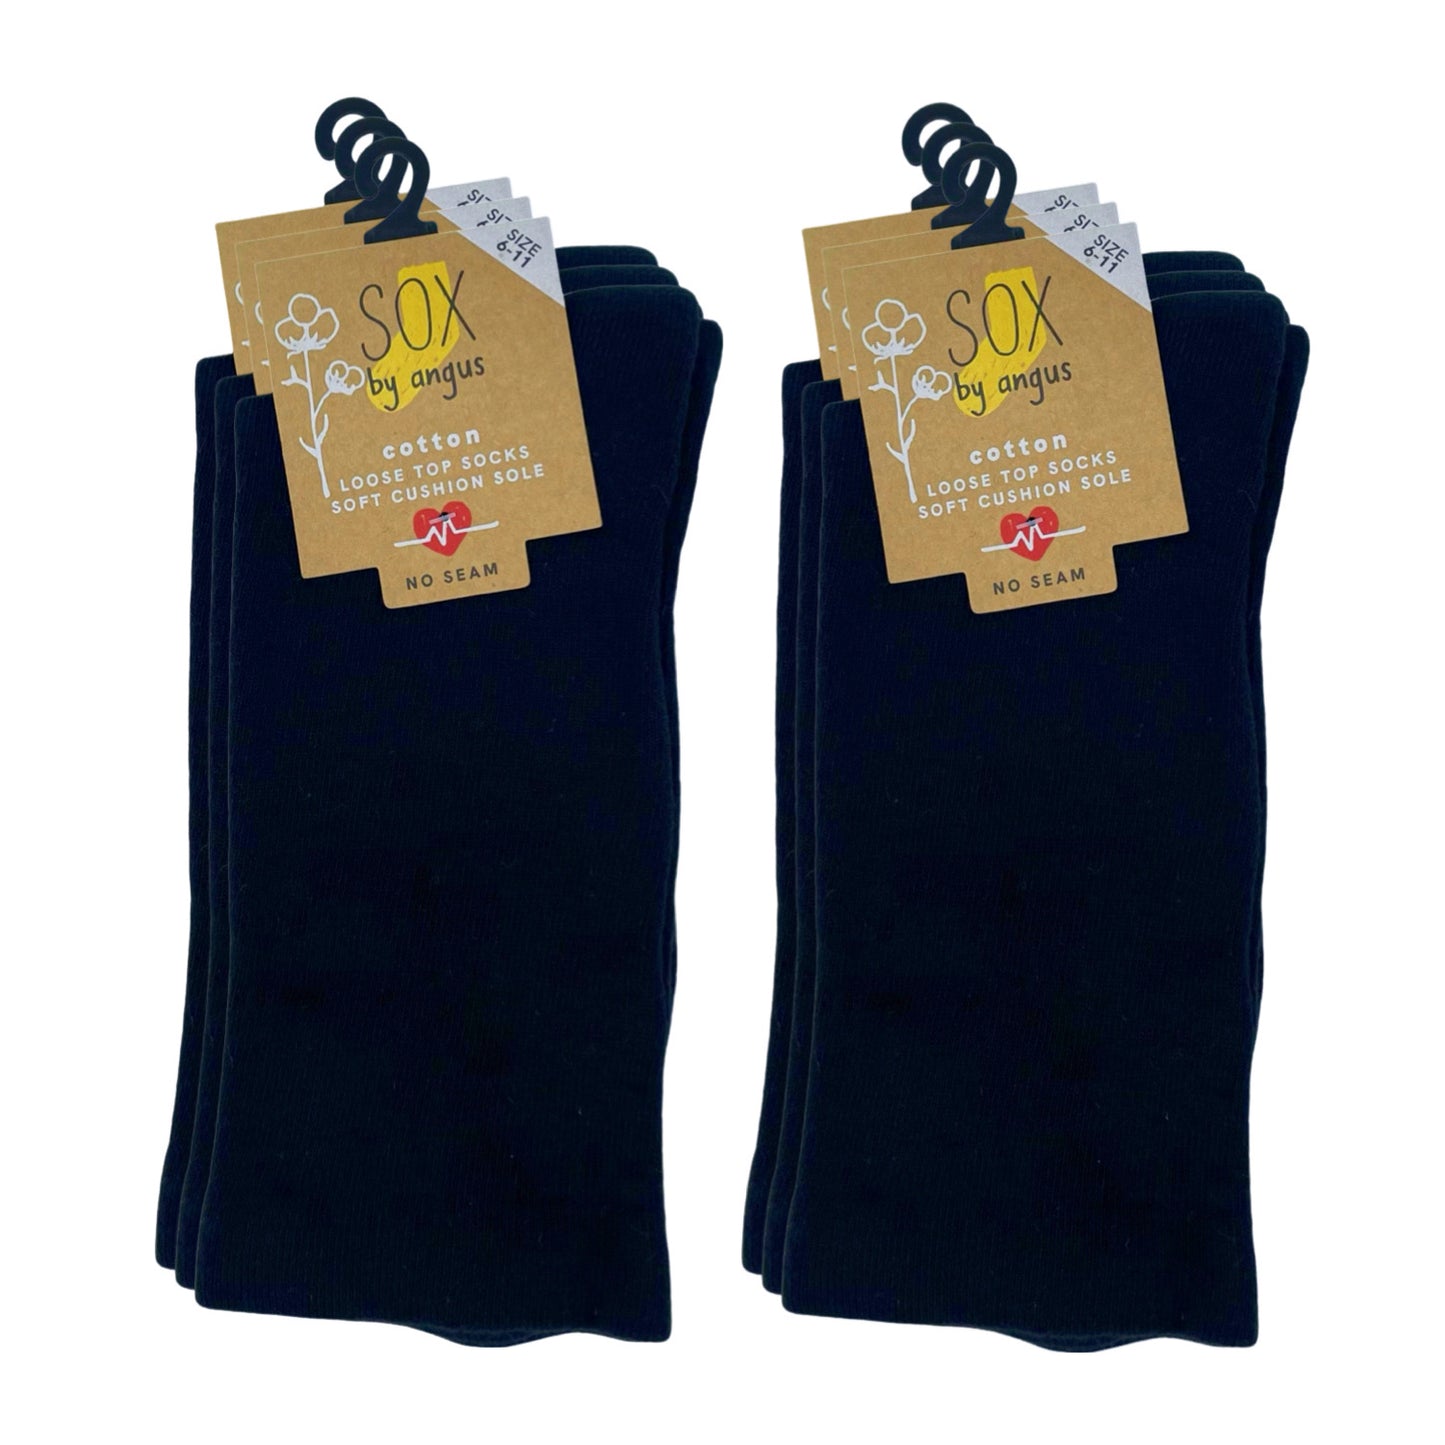 Cotton Plain Cushion Foot Loose Top Socks - Black - NO SEAM